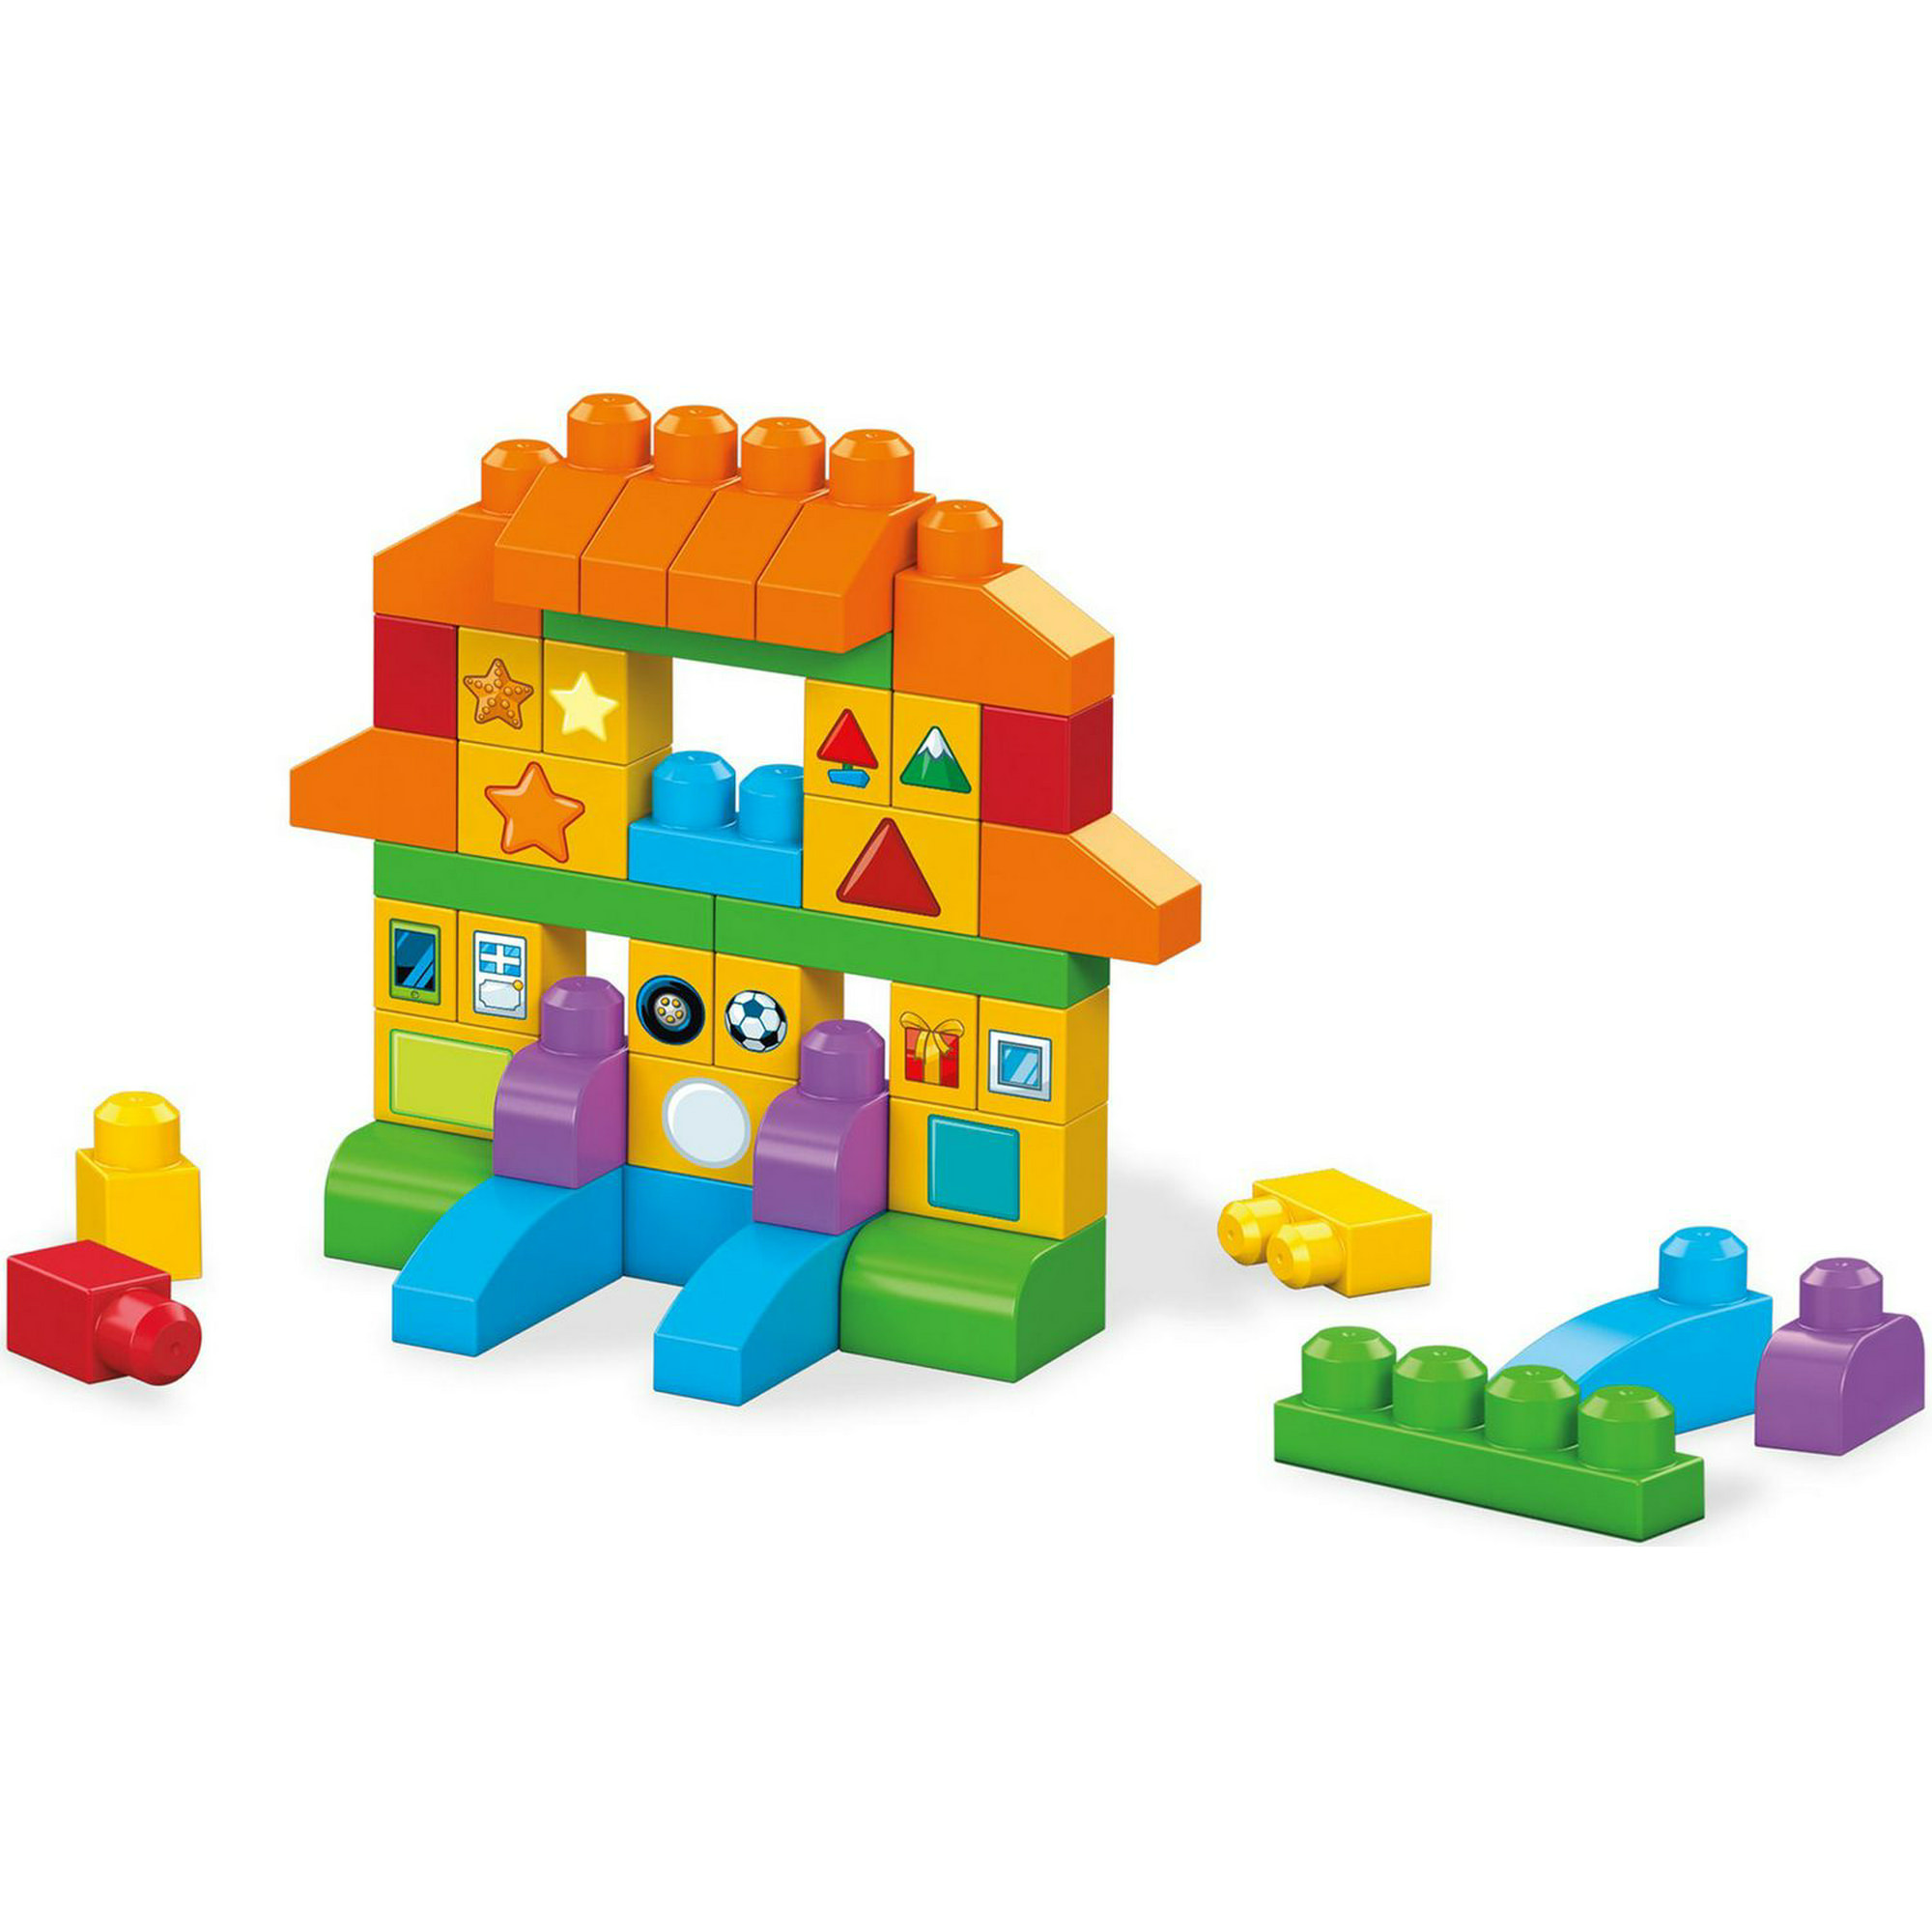 MEGA BLOKS Fisher Price 24 Piece Sensory Building Blocks Toy, Move N Groove  Caterpillar Train